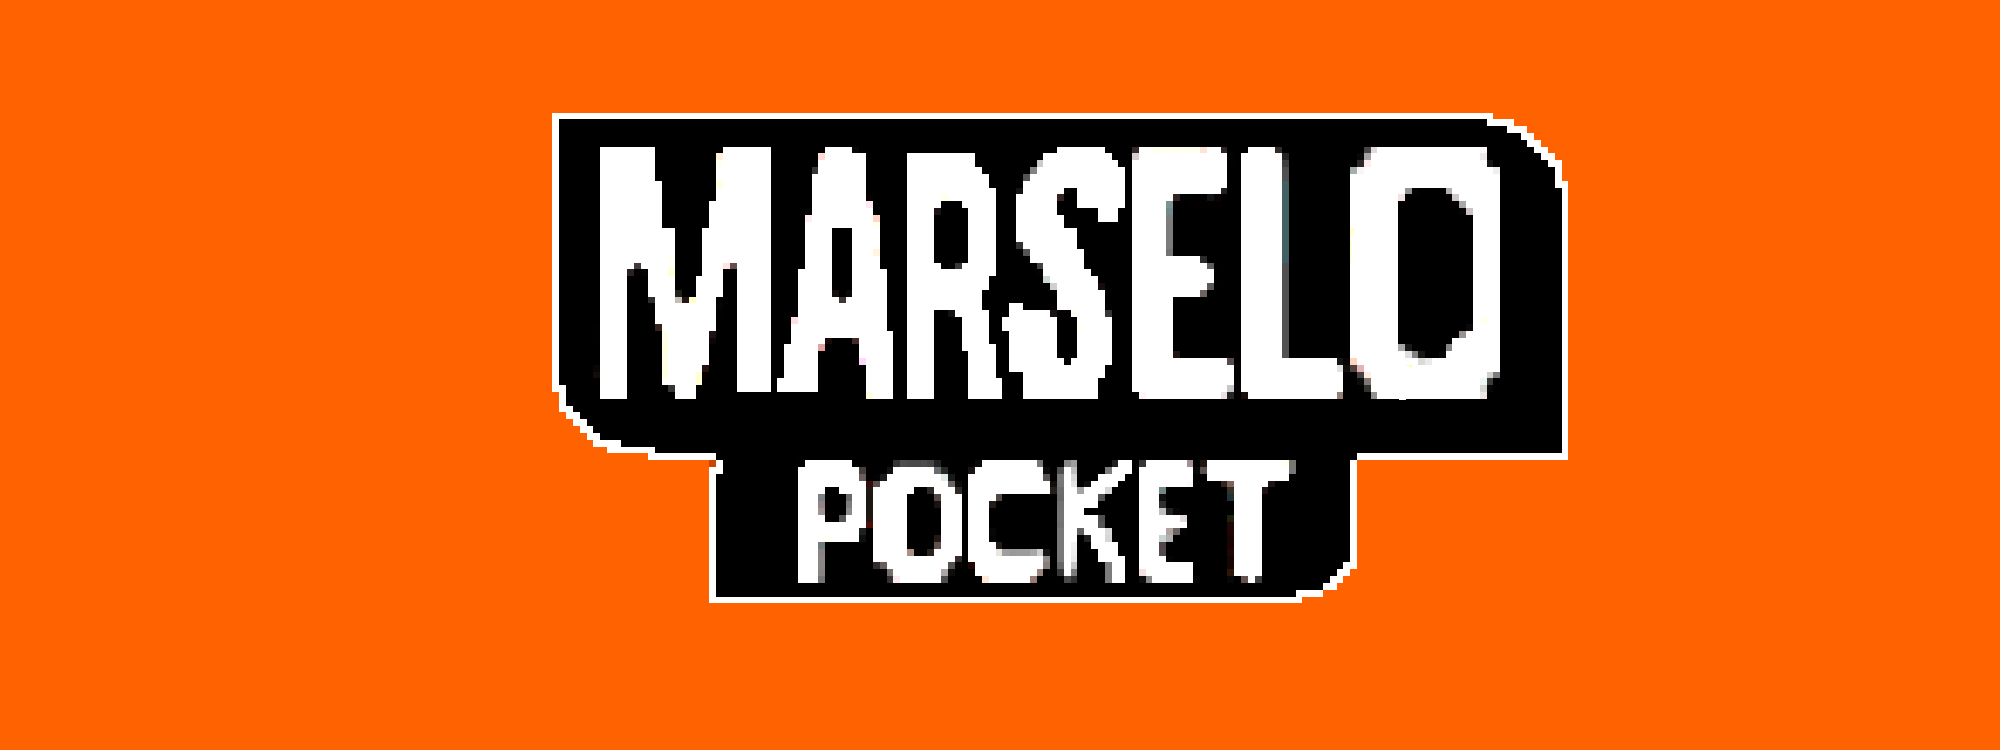 Marselo Pocket